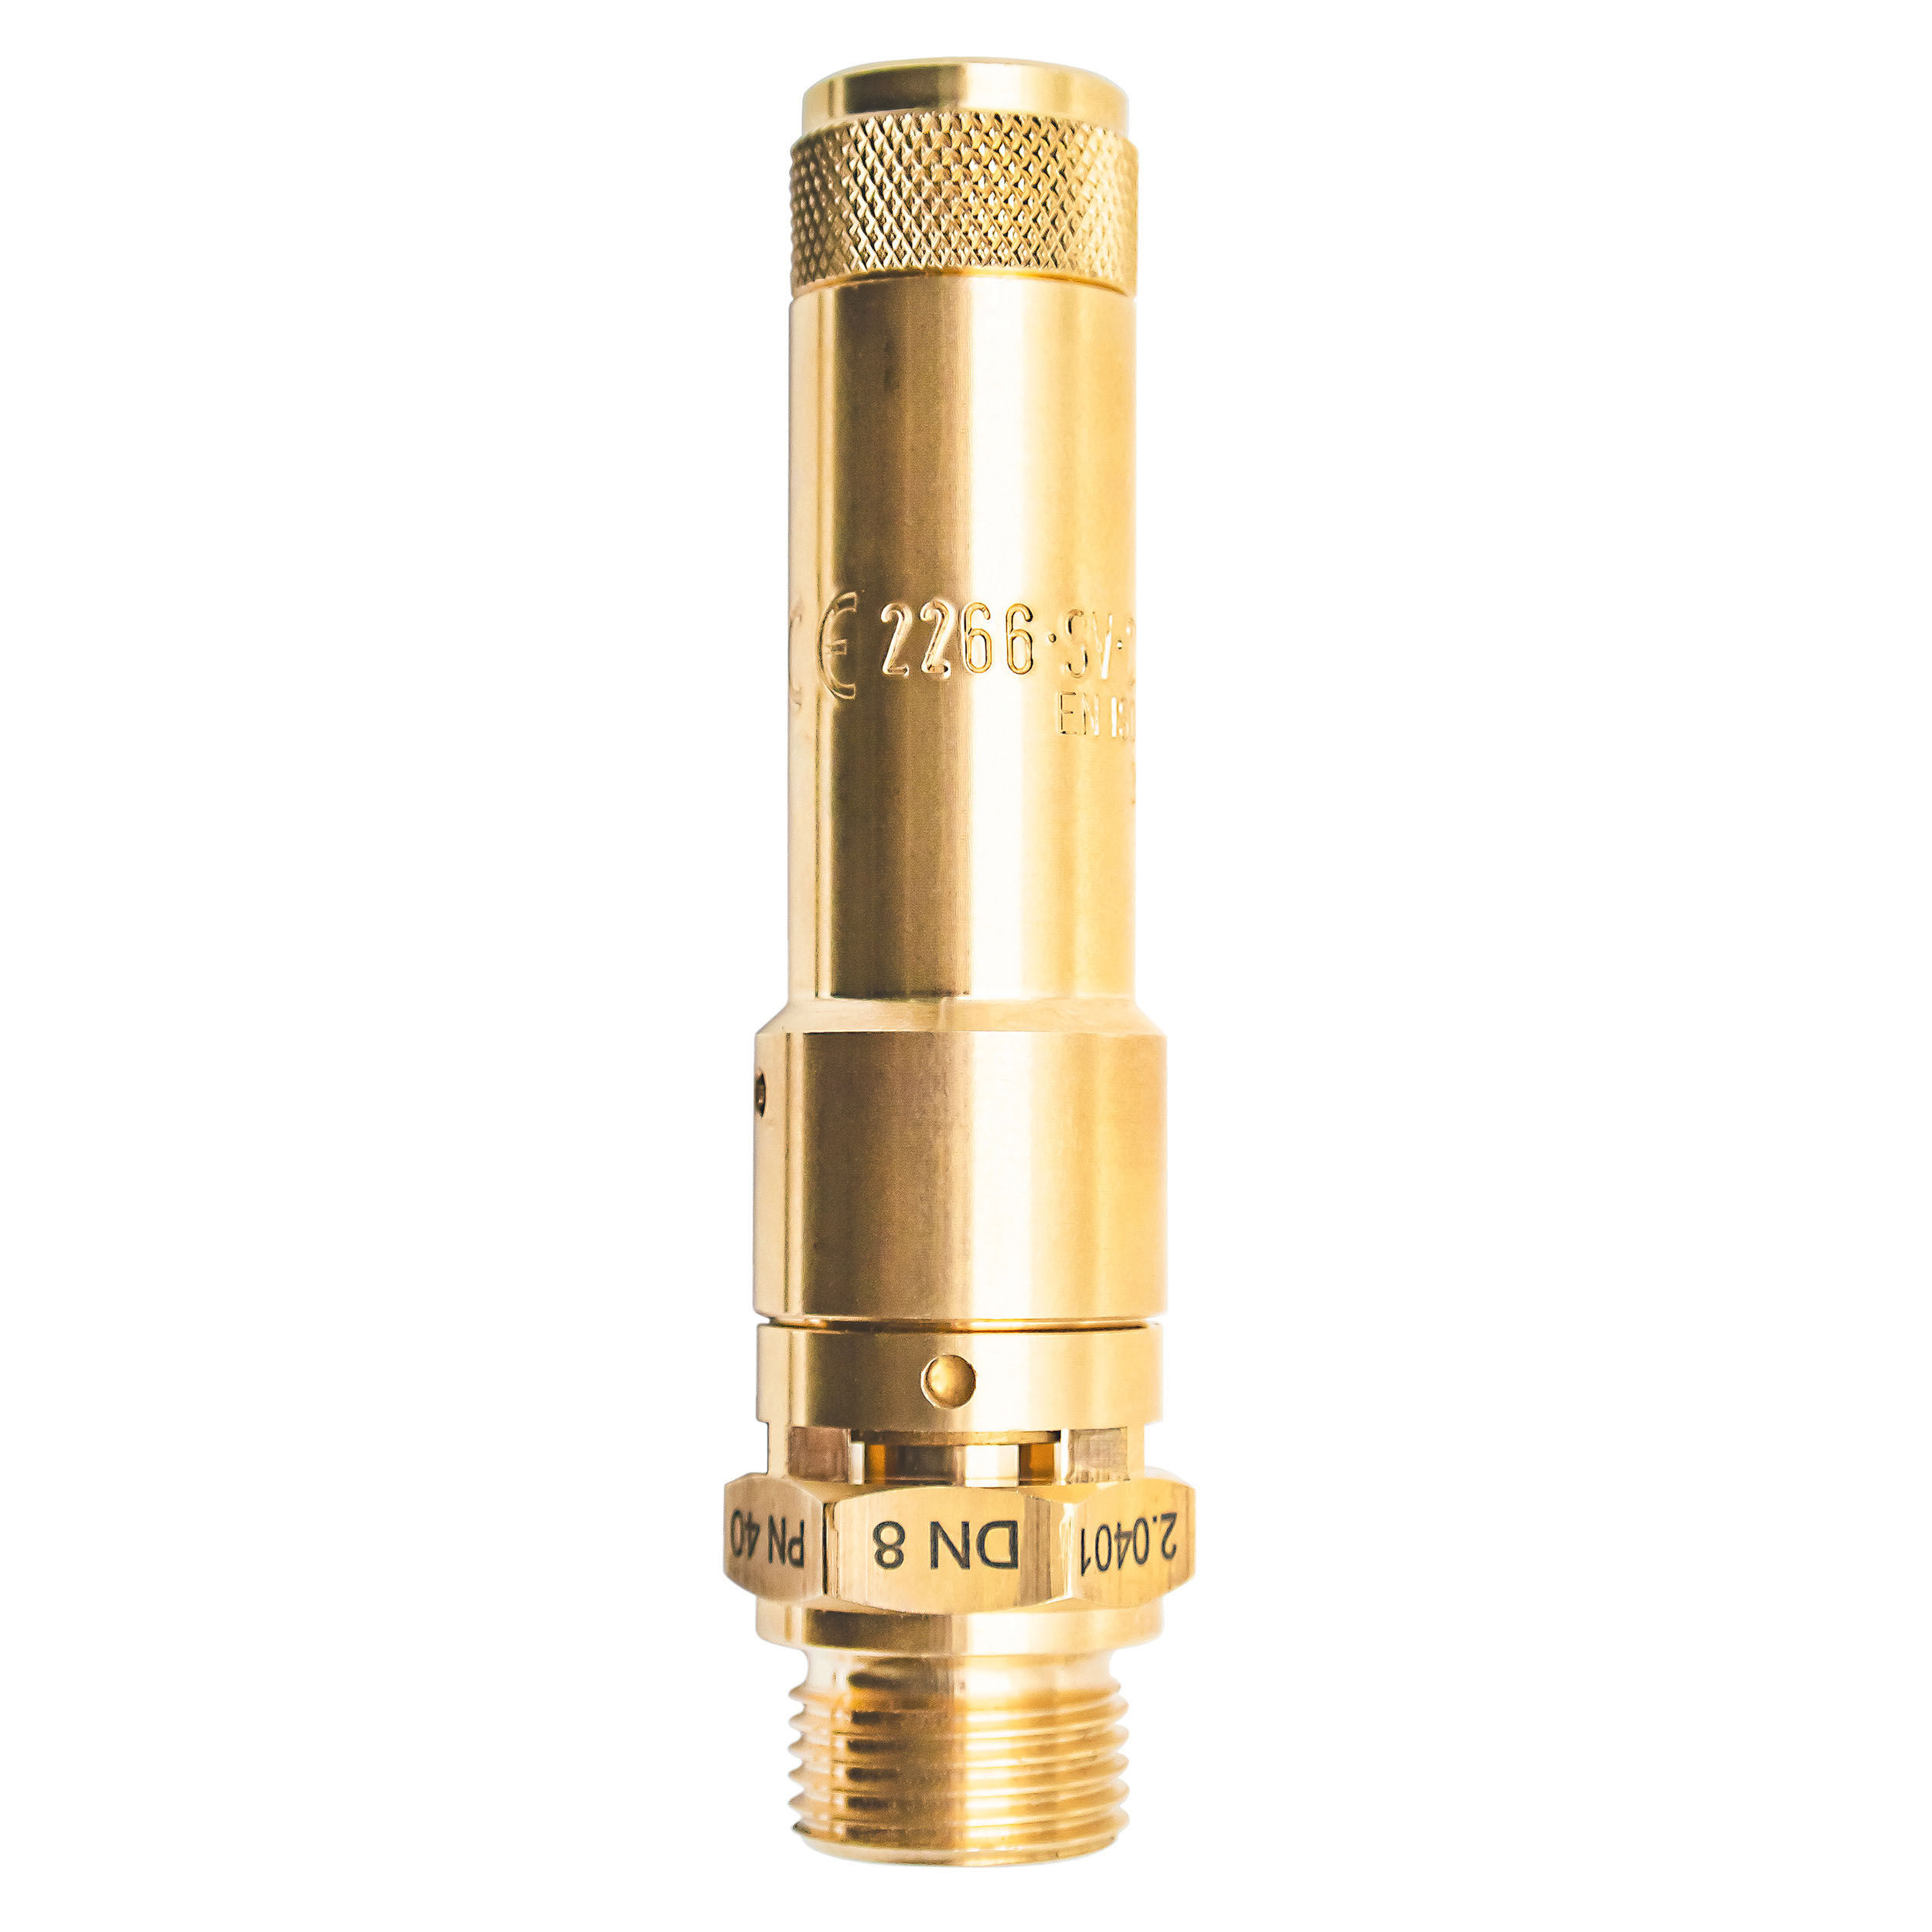 Component-tested safety valve DN 8, G⅜, pressure: 1.6-2 bar